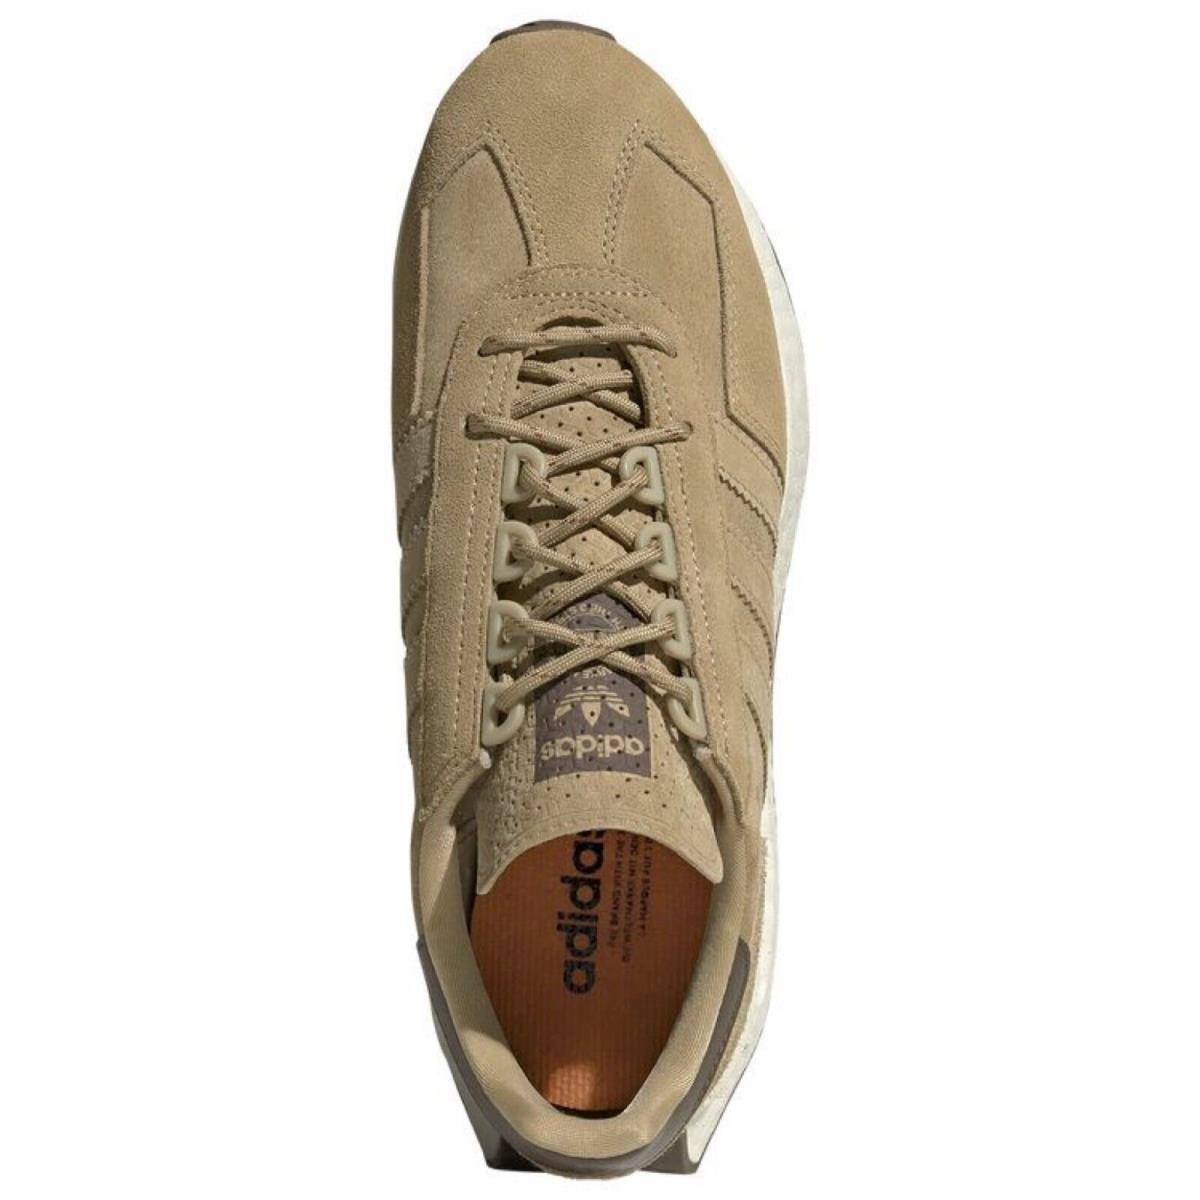 Adidas shoes Originals - Brown , Cardboard/Aluminum Manufacturer 9